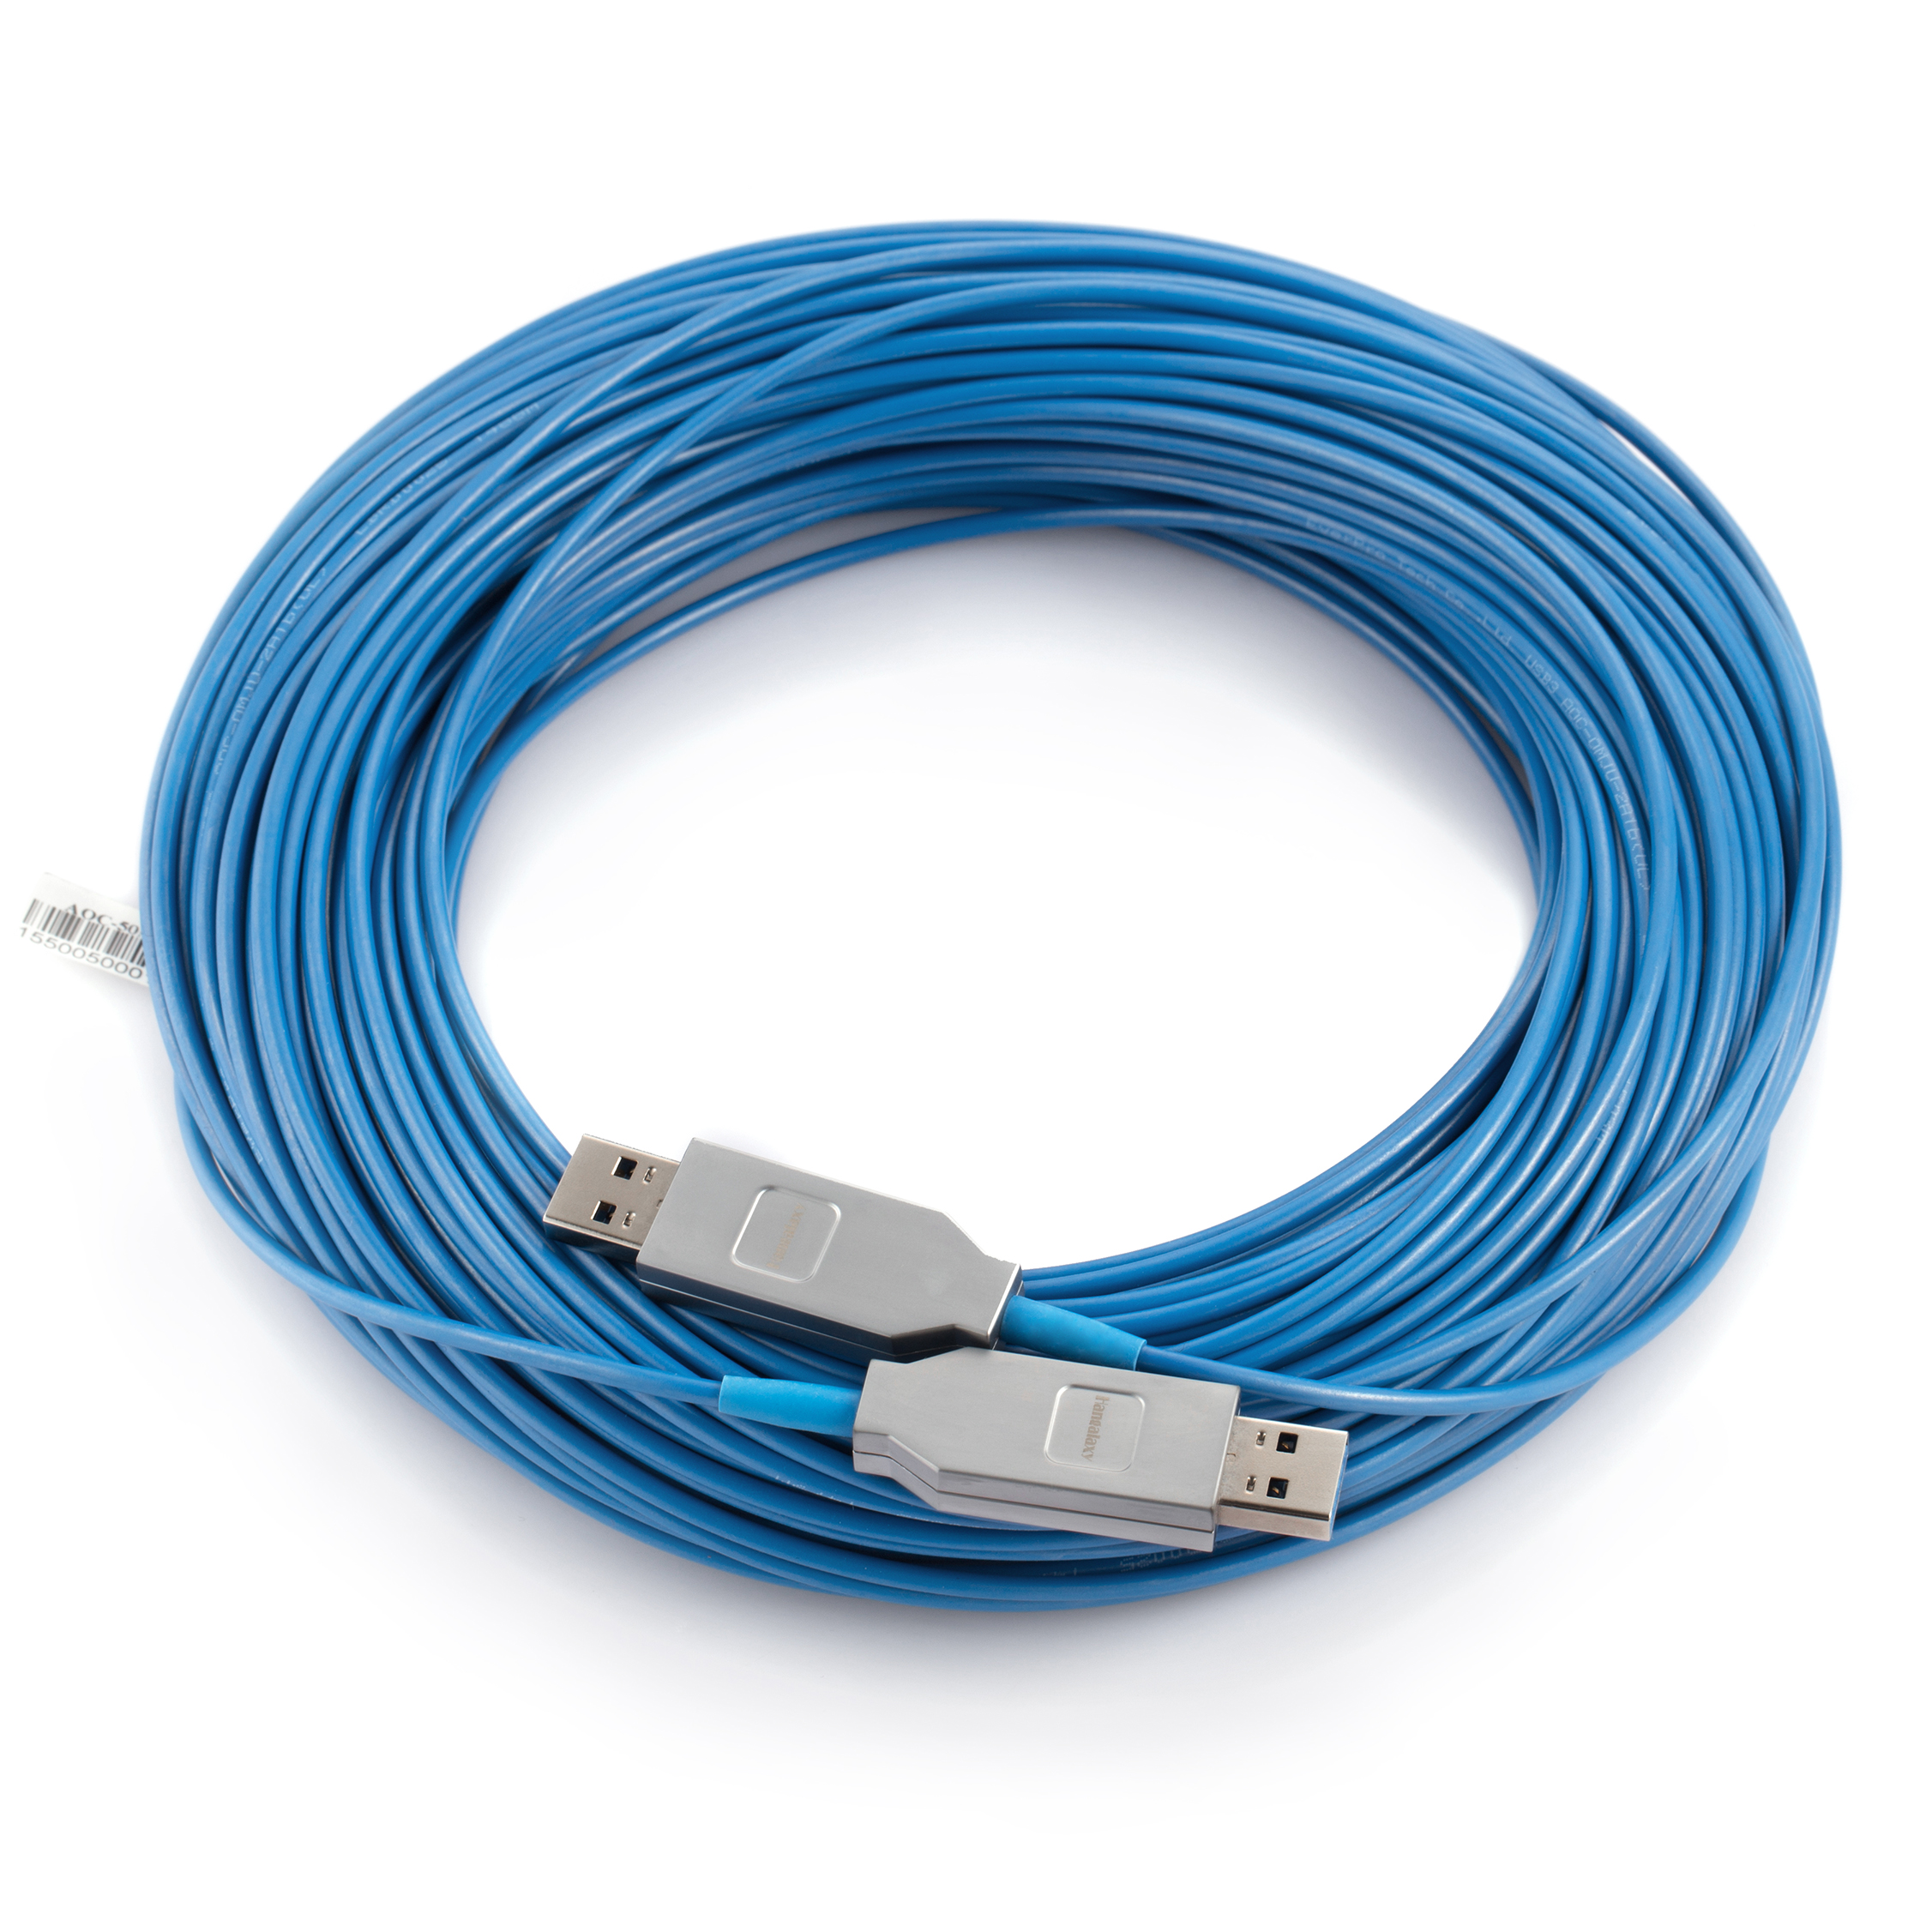 USB3.0 Hybrid Cable HU3 Series(No power supply)